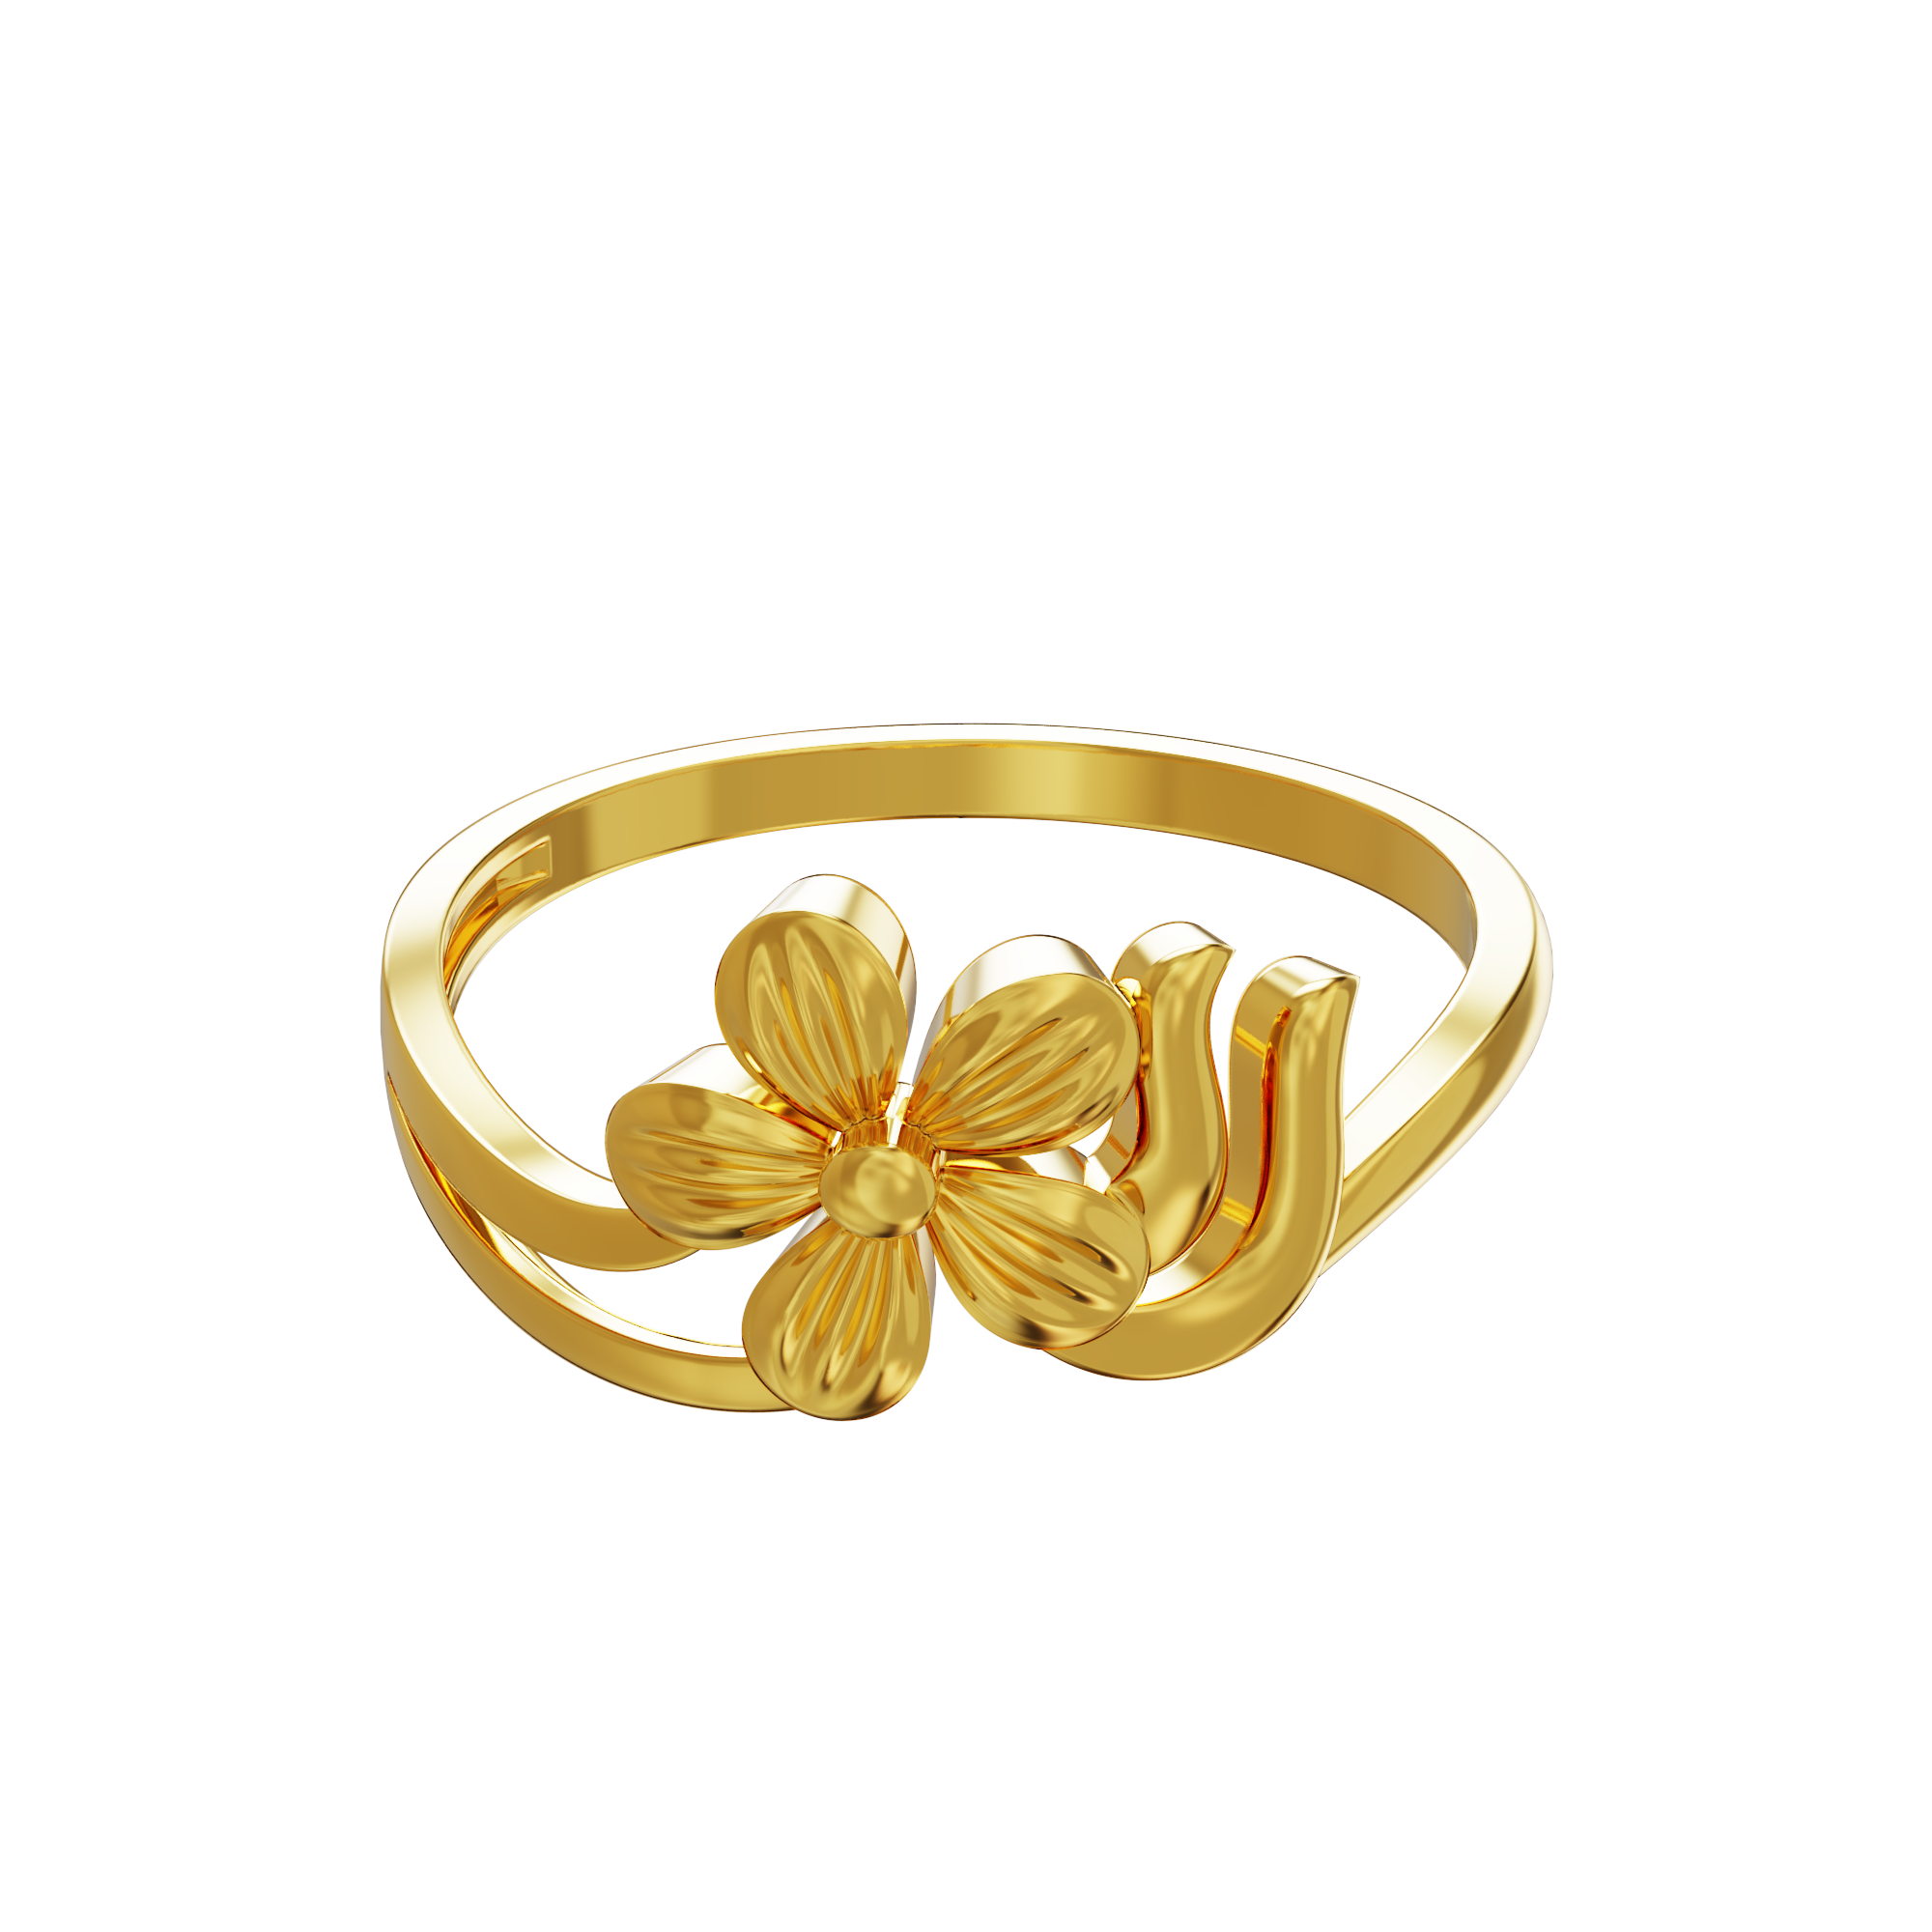 New Engagement Ring Designs | Shona, Glasgow Jewellery Designer